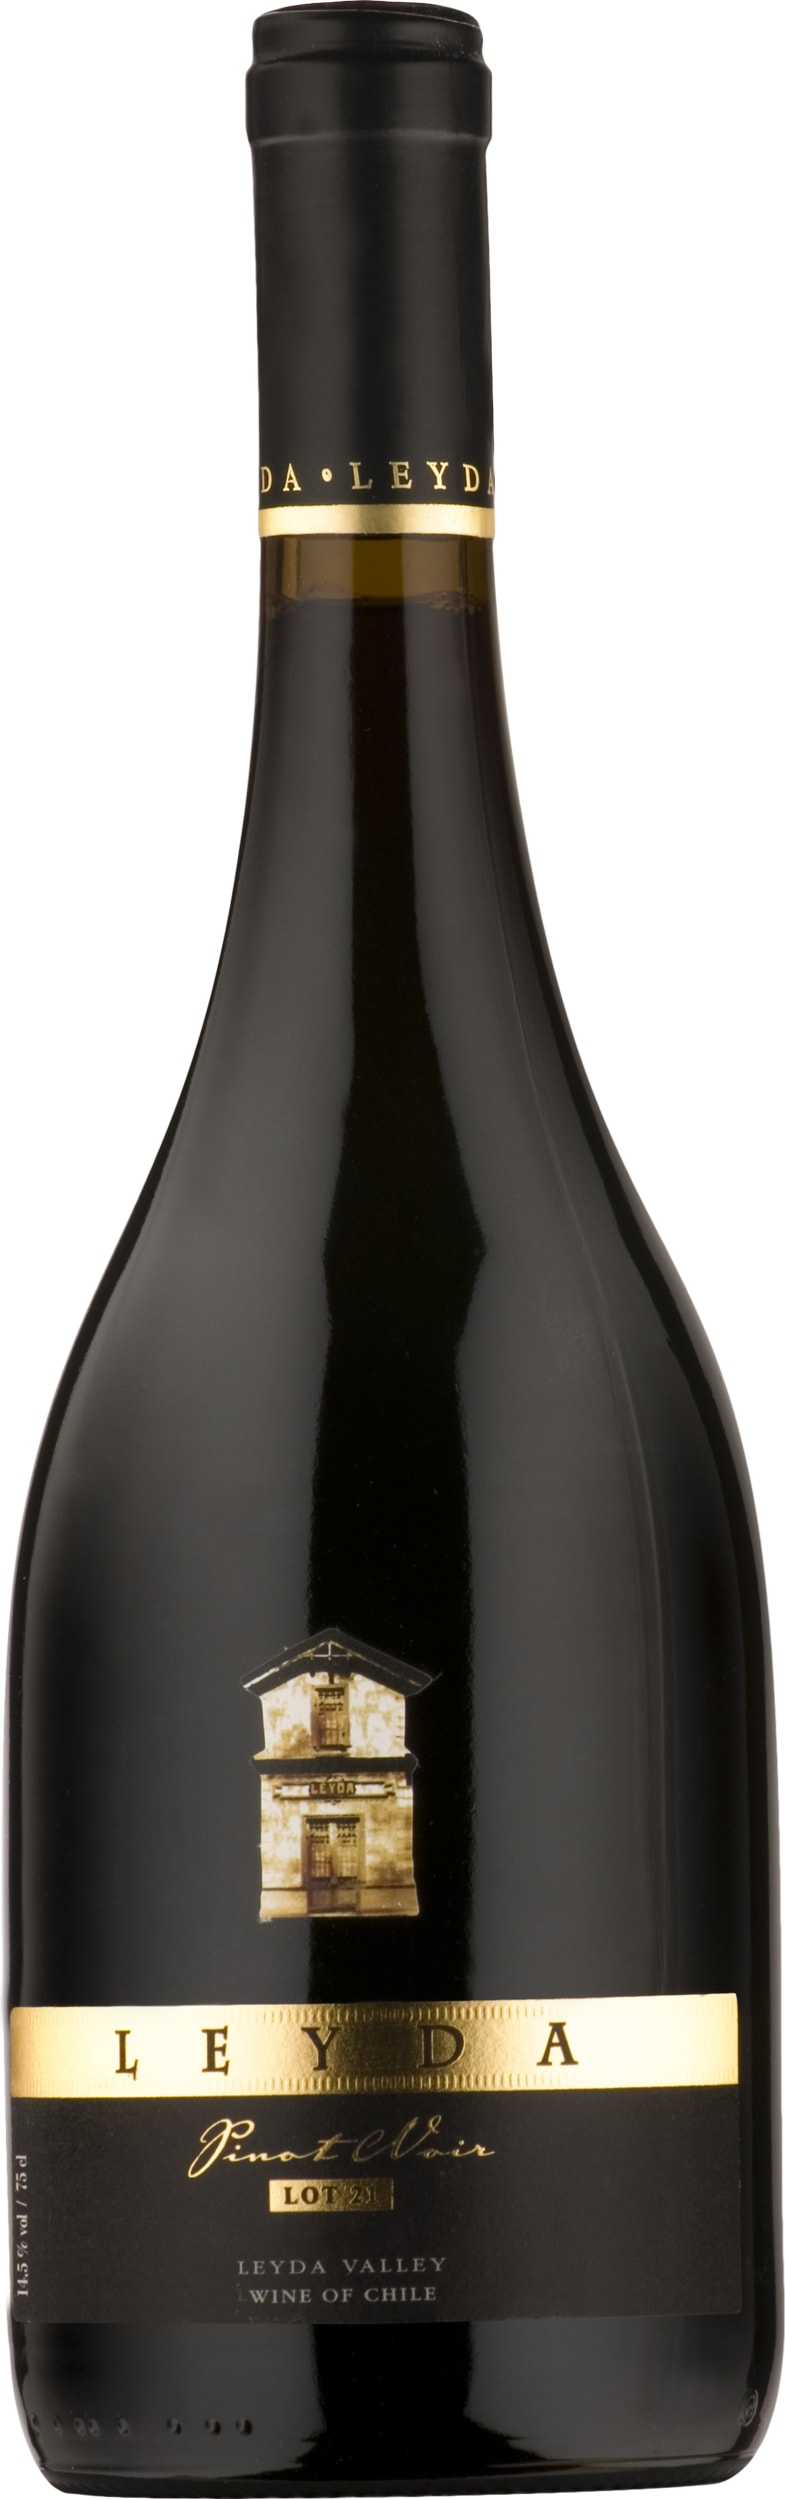 Vina Leyda Pinot Noir Lot 21 2020 75cl - Buy Vina Leyda Wines from GREAT WINES DIRECT wine shop